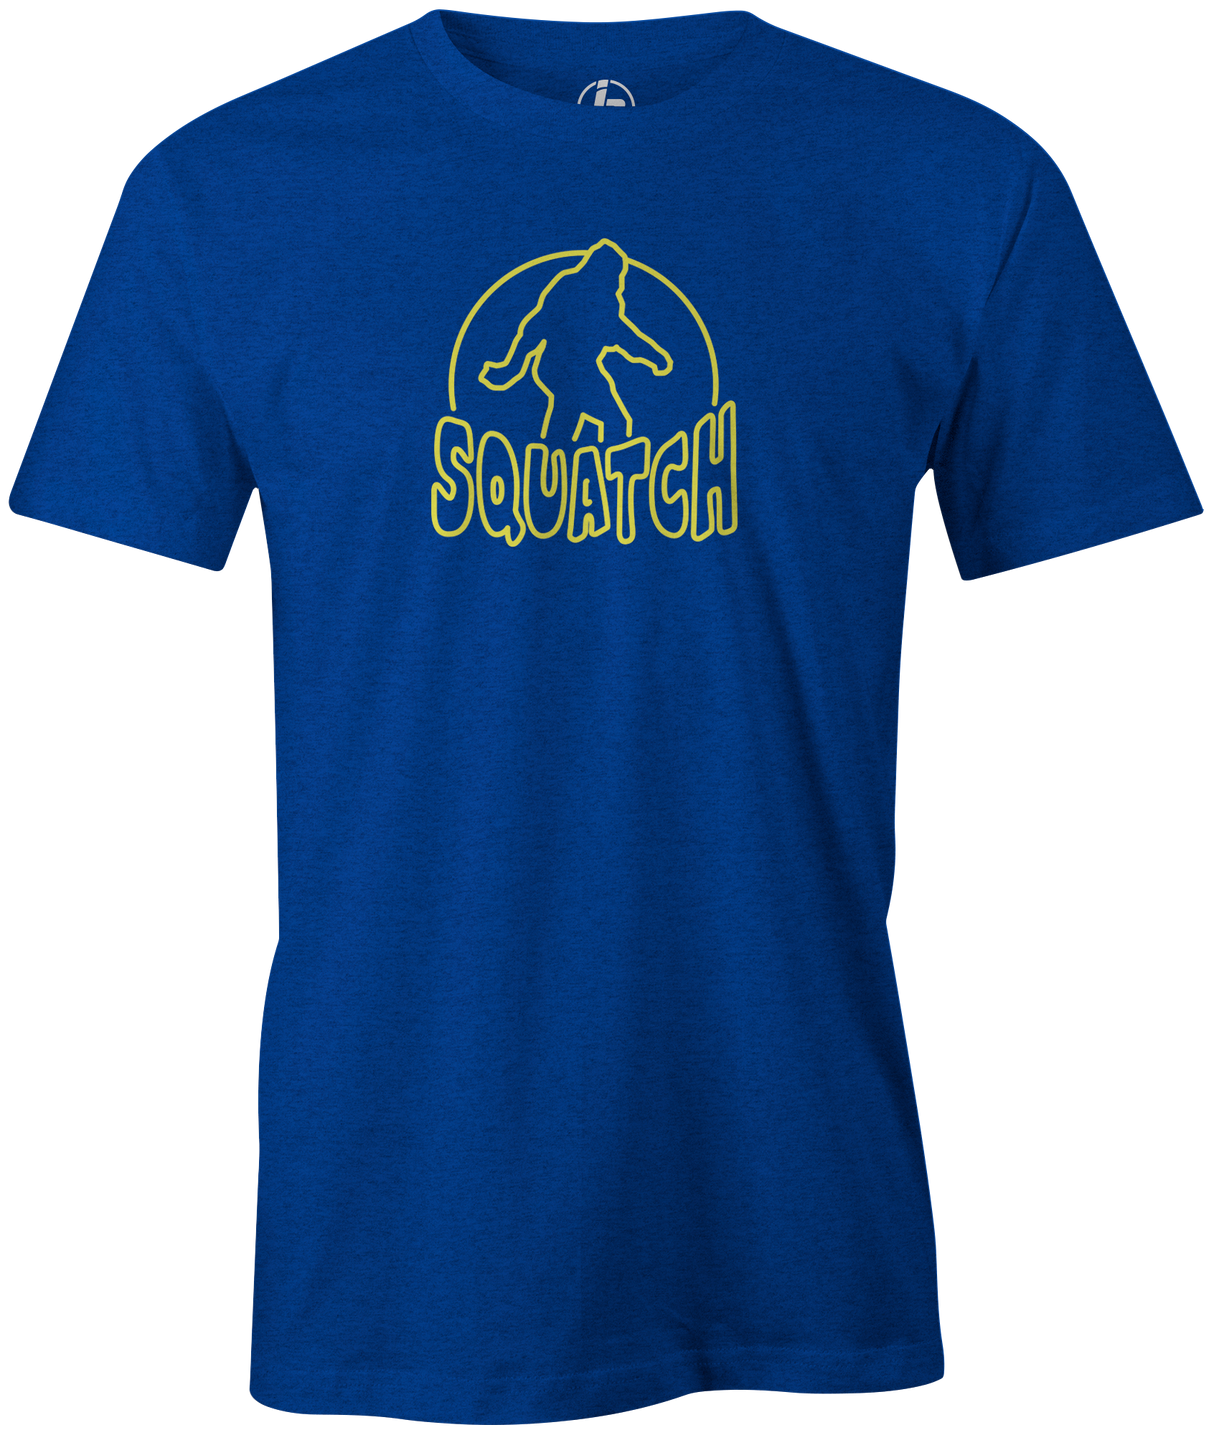 Radical Squatch Men's T-Shirt, Blue, bowling, bowling ball, tee, tee shirt, tee-shirt, t shirt, t-shirt, tees, league bowling team shirt, tournament shirt, funny, cool, awesome, brunswick, brand